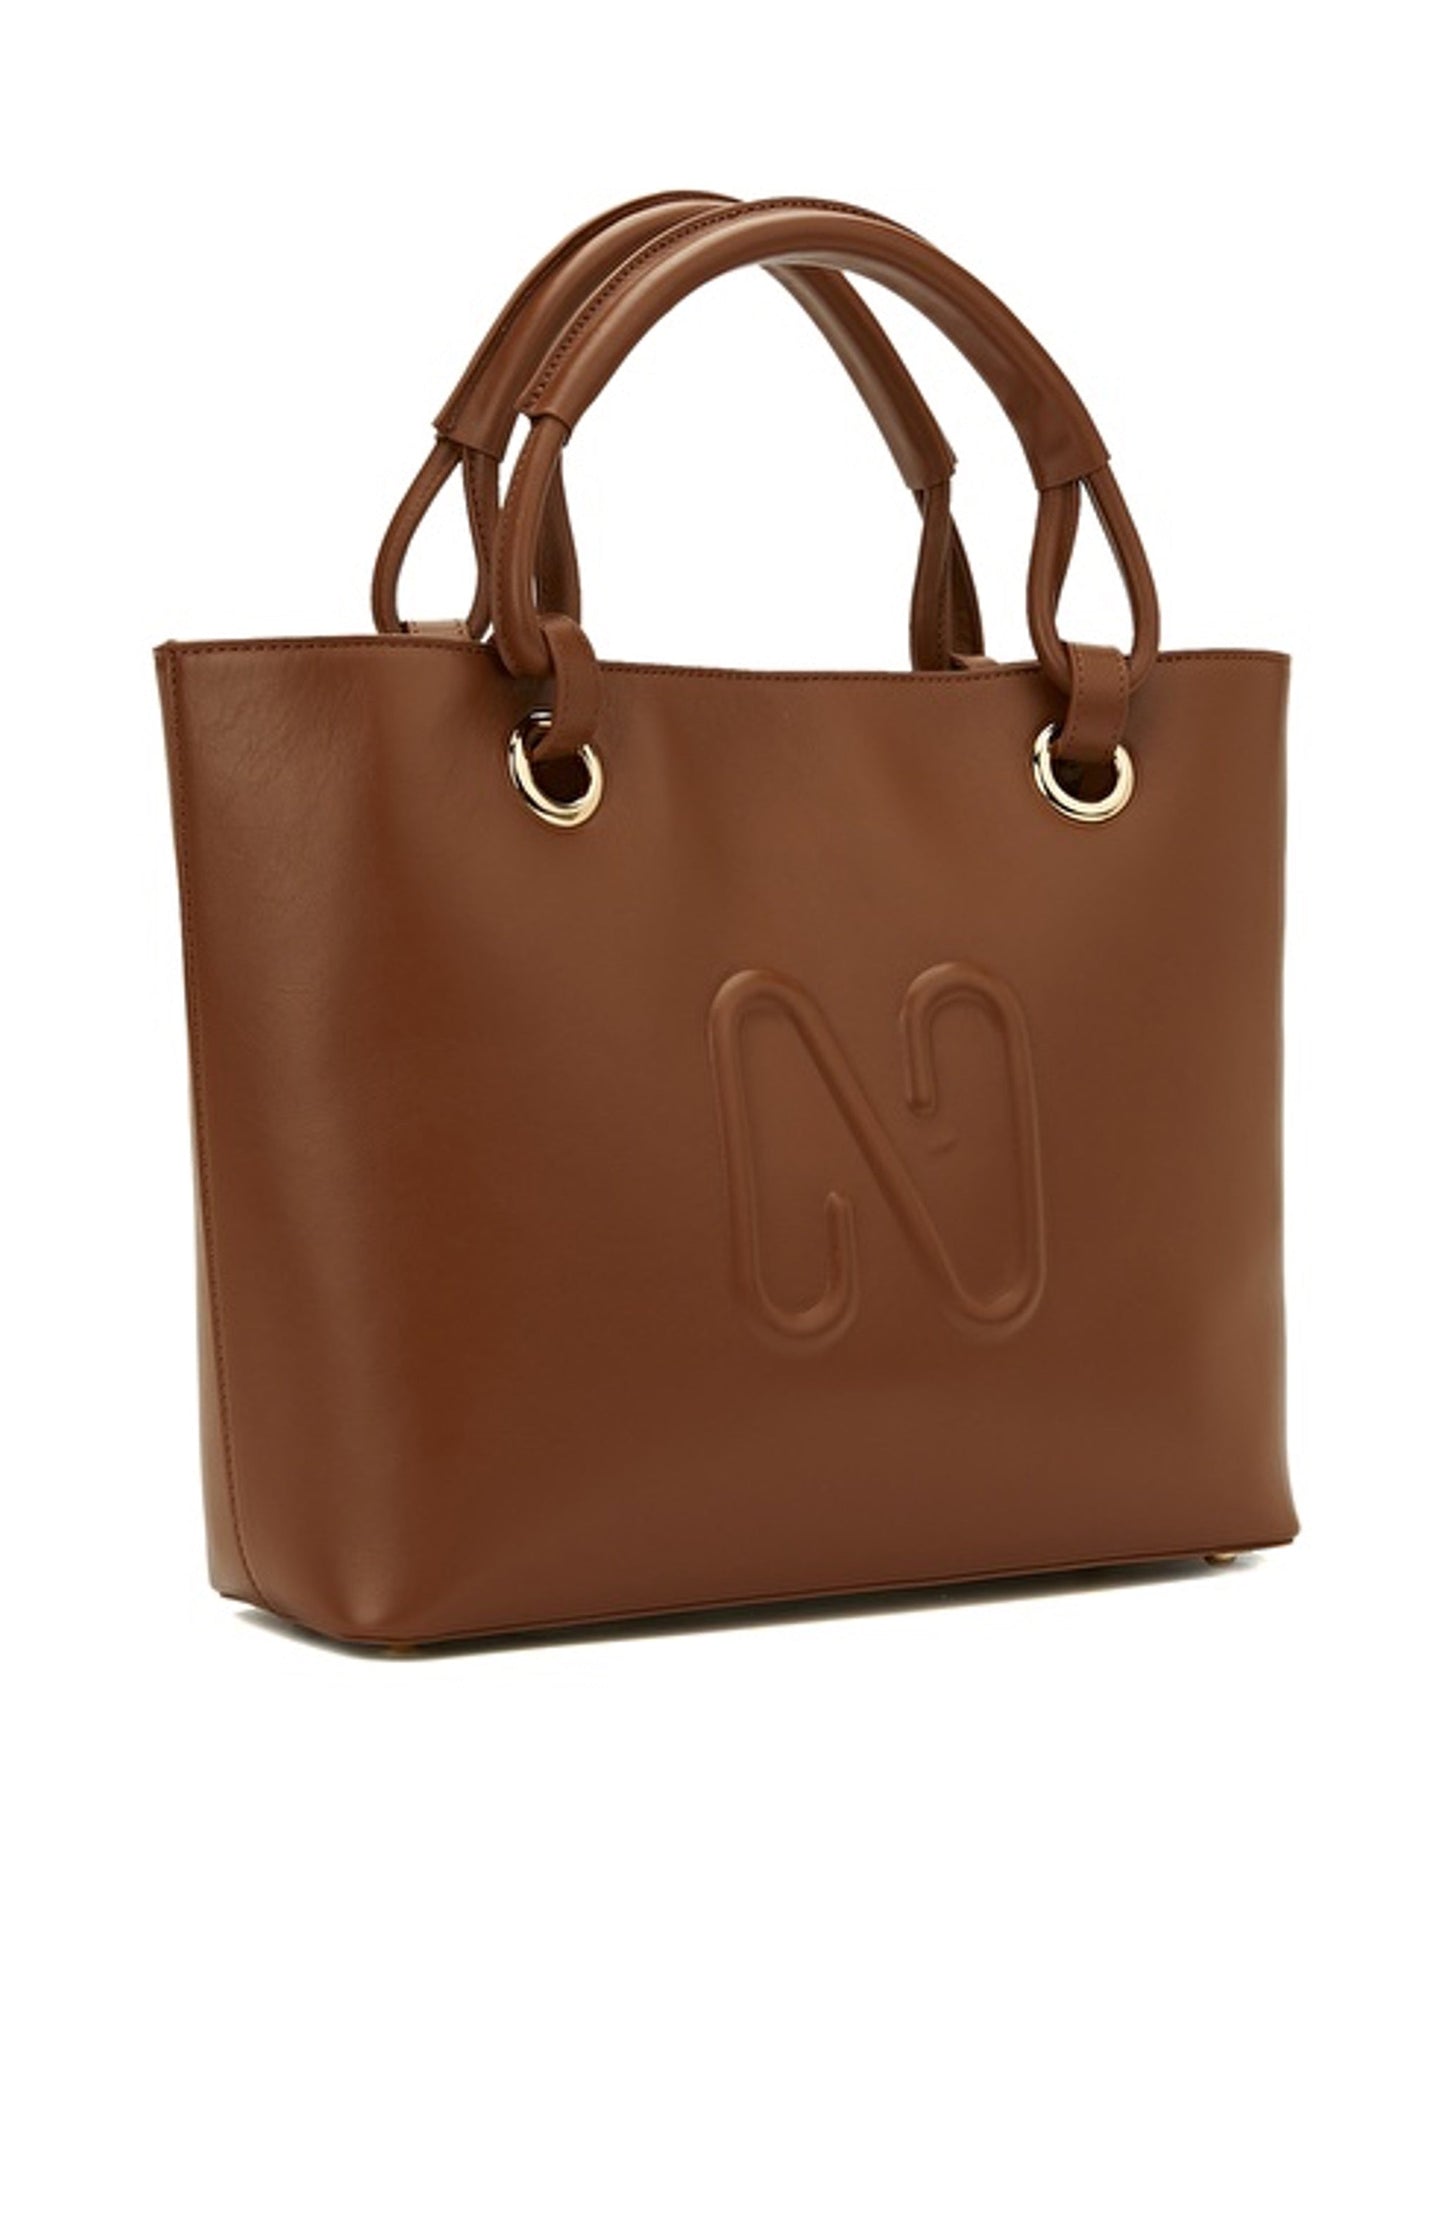 Woman Handbag 100% Leather Bag Brown Color Handle and Shoulder Strap